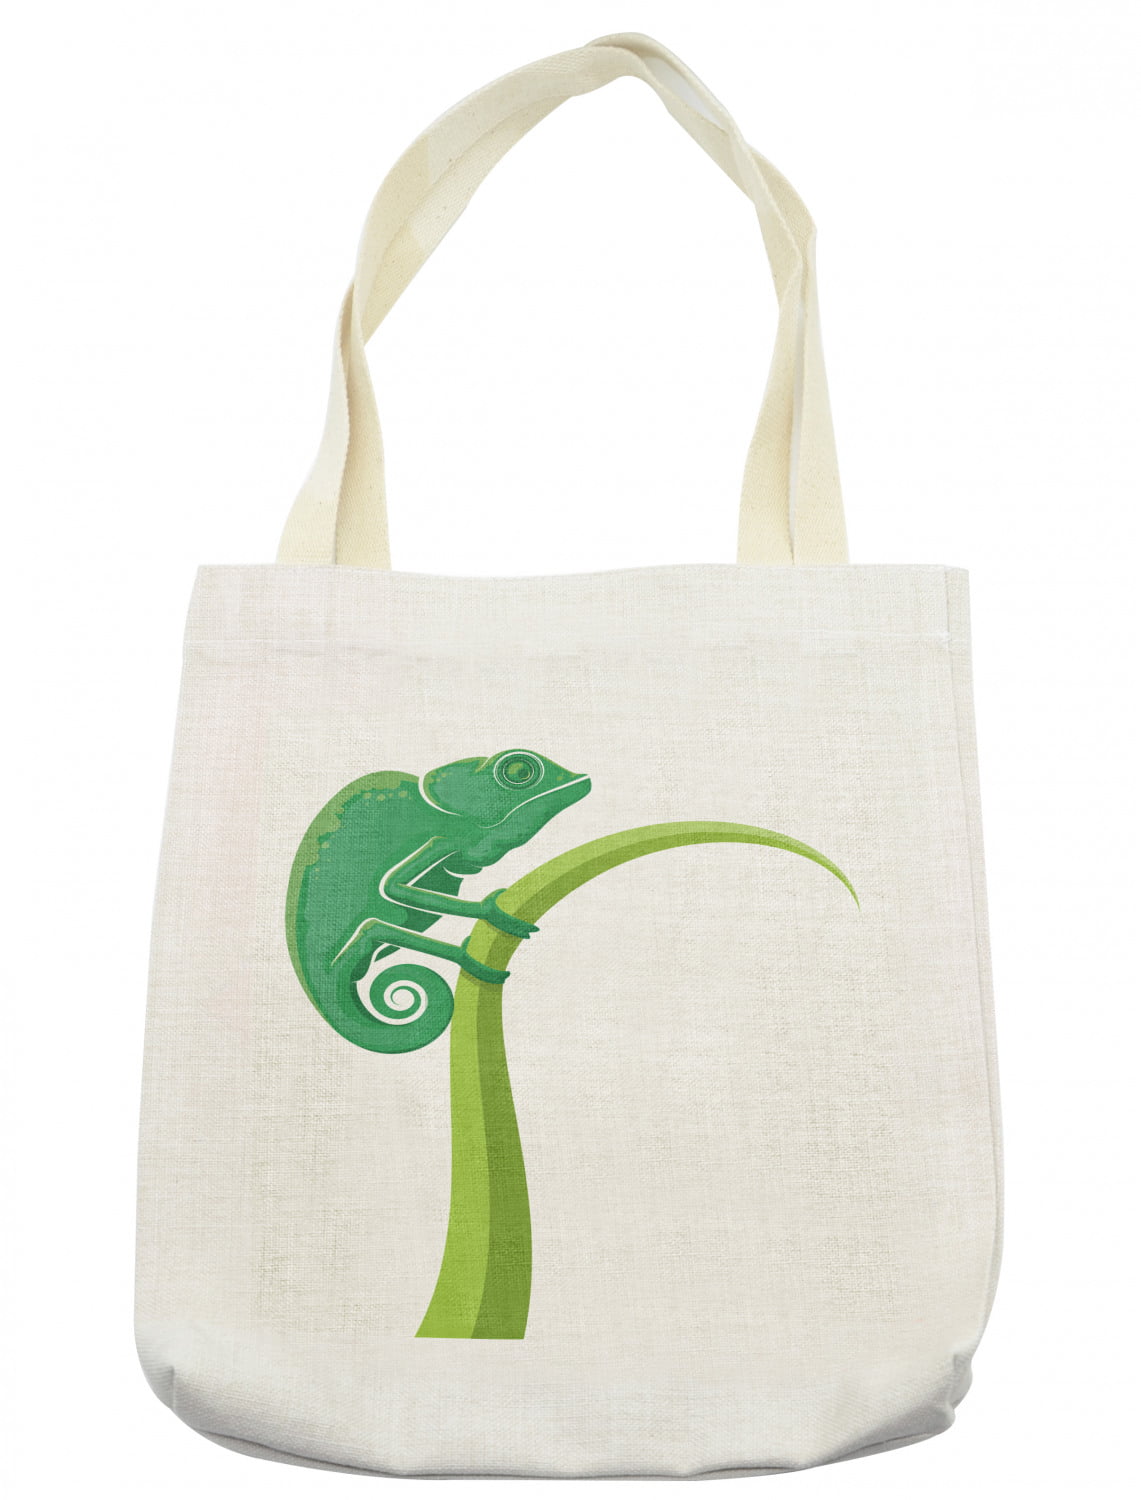 Reusable Tote Bag Lizard Jungle Tropical Animal Shoulder Bag for Teens Carrying Tote Bag Large Capacity Water Resistant with Durable Handle 